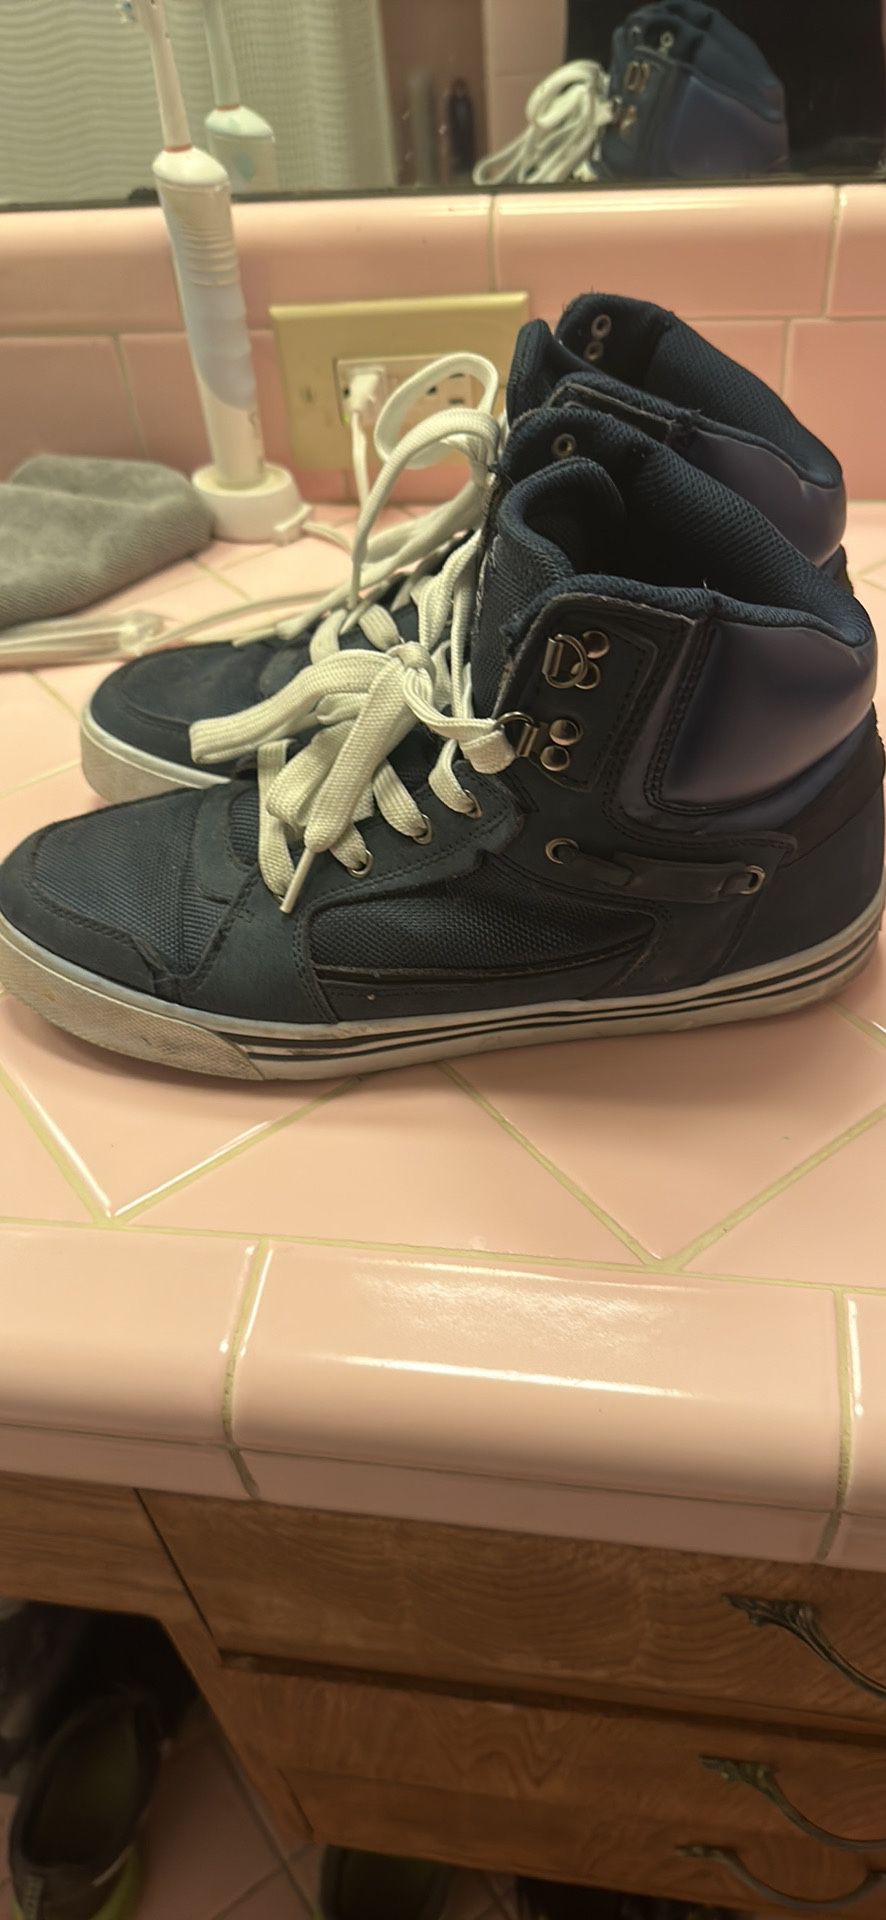 Steve Madden Men’s Shoes 8.5 Navy Blue High tops for Sale in San ...